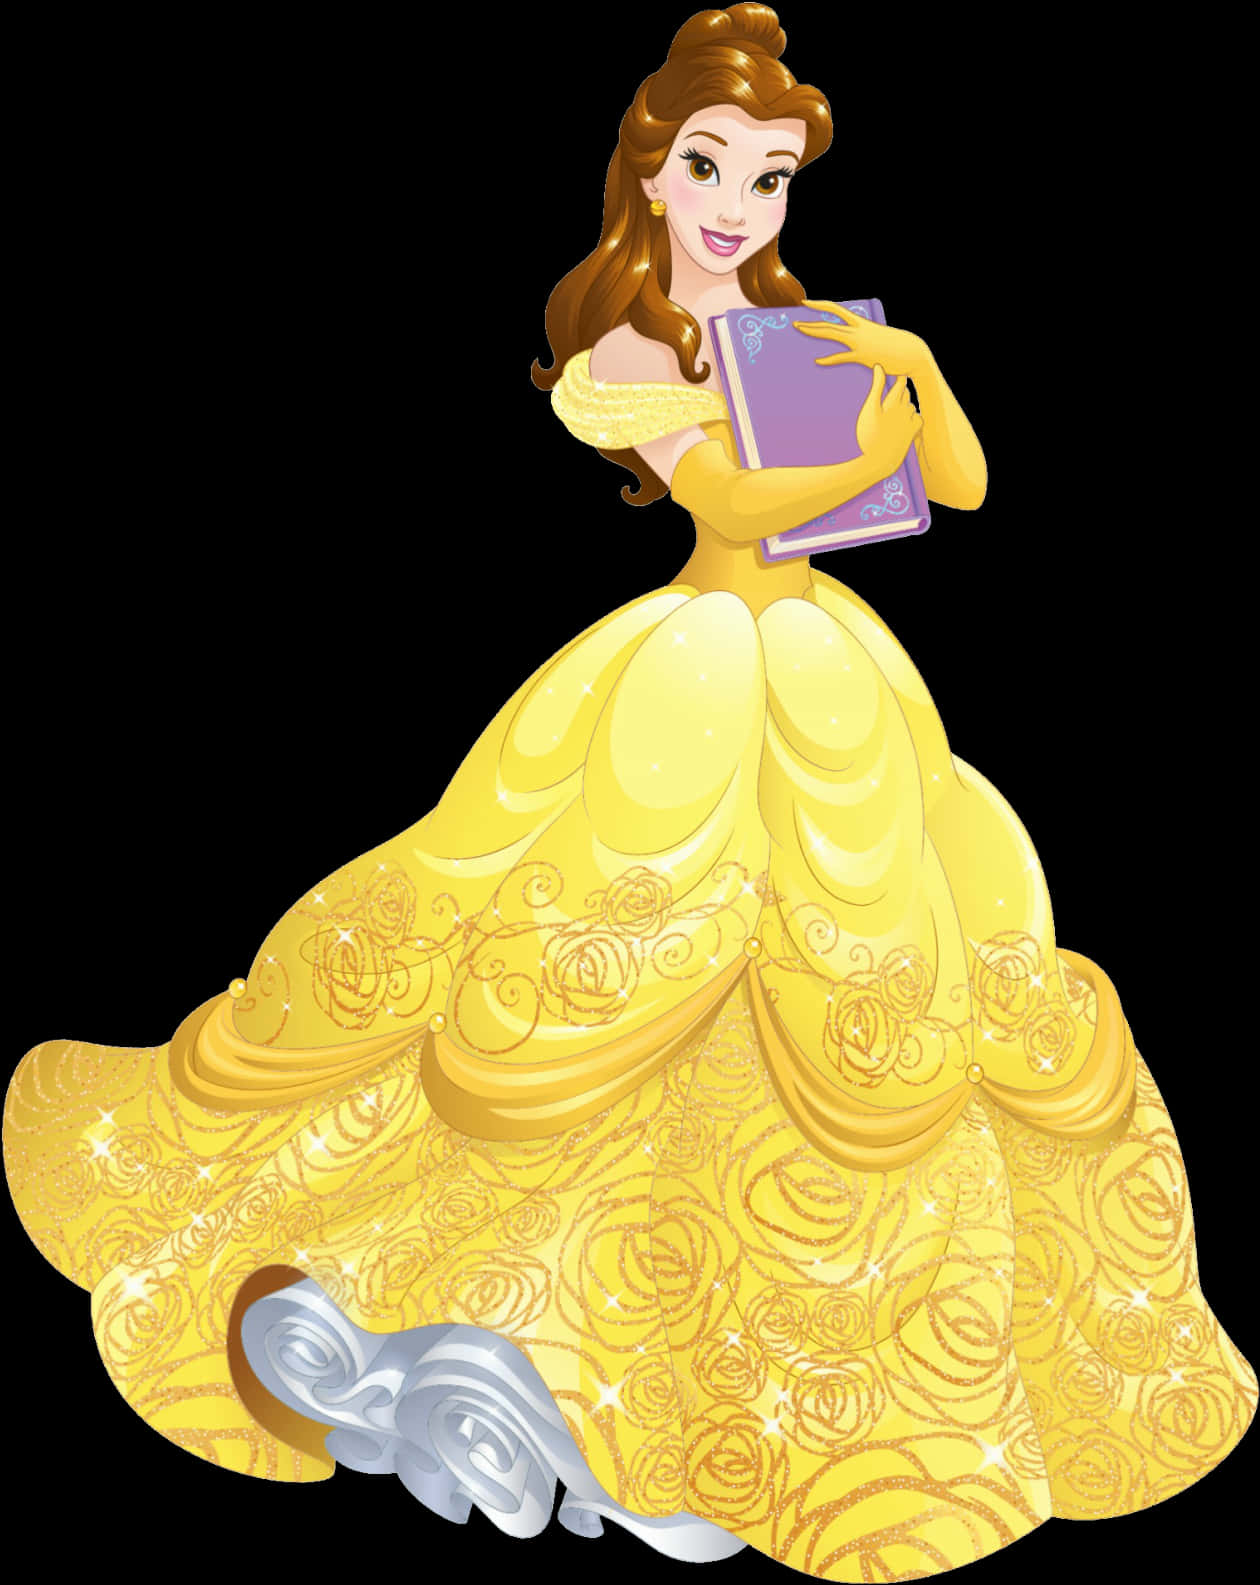 Disney Princess Belle With Book